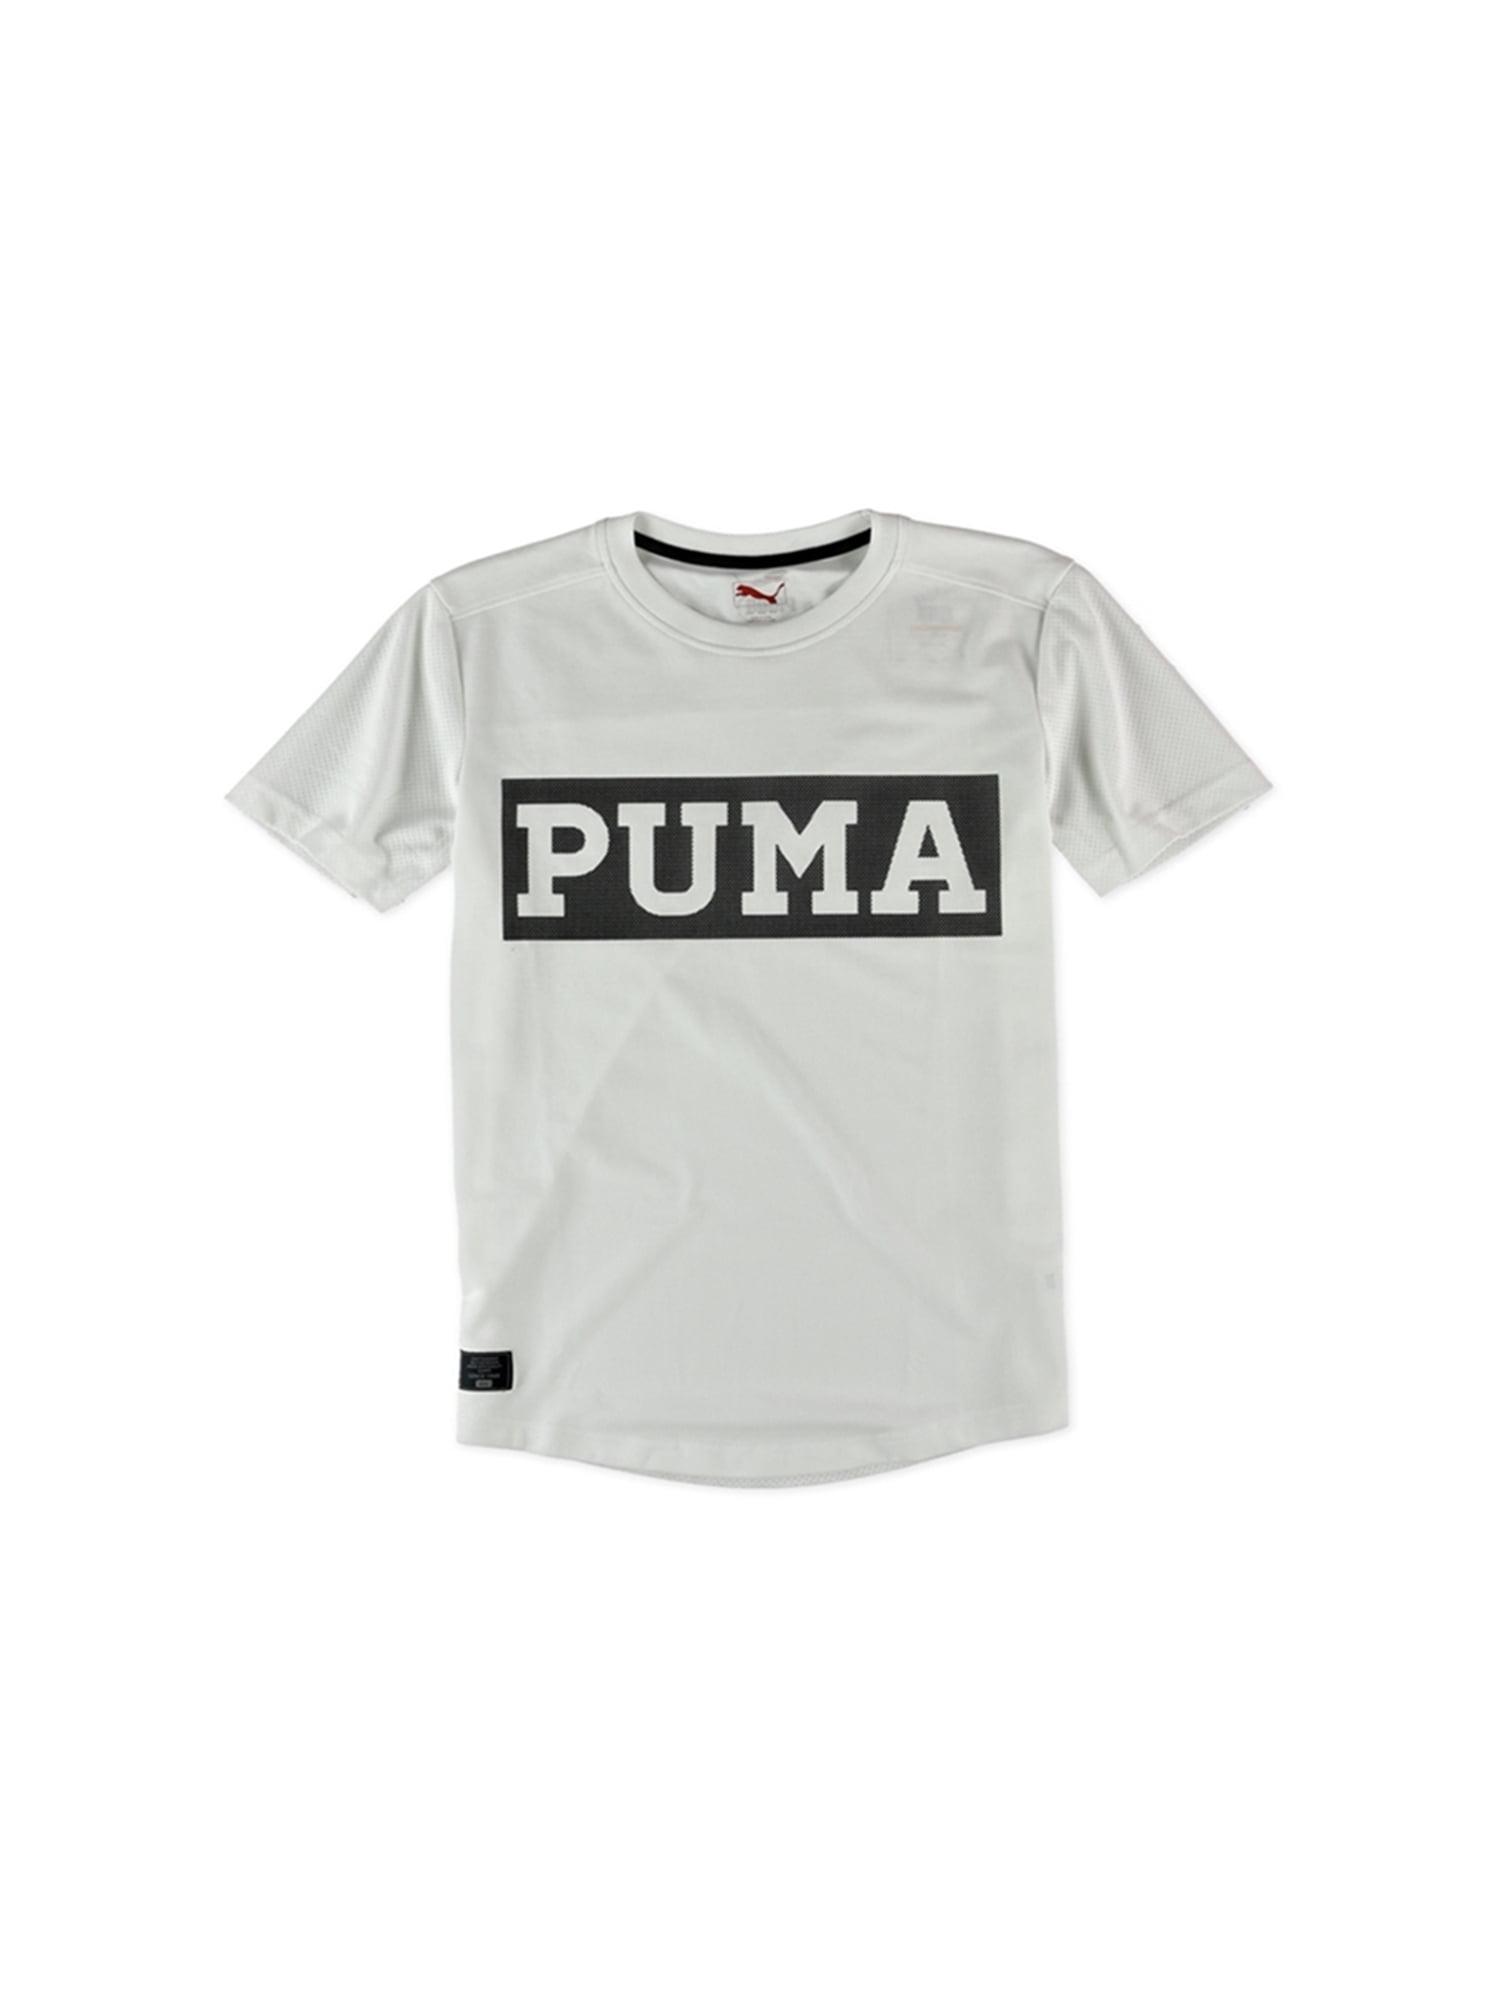 puma t shirts canada